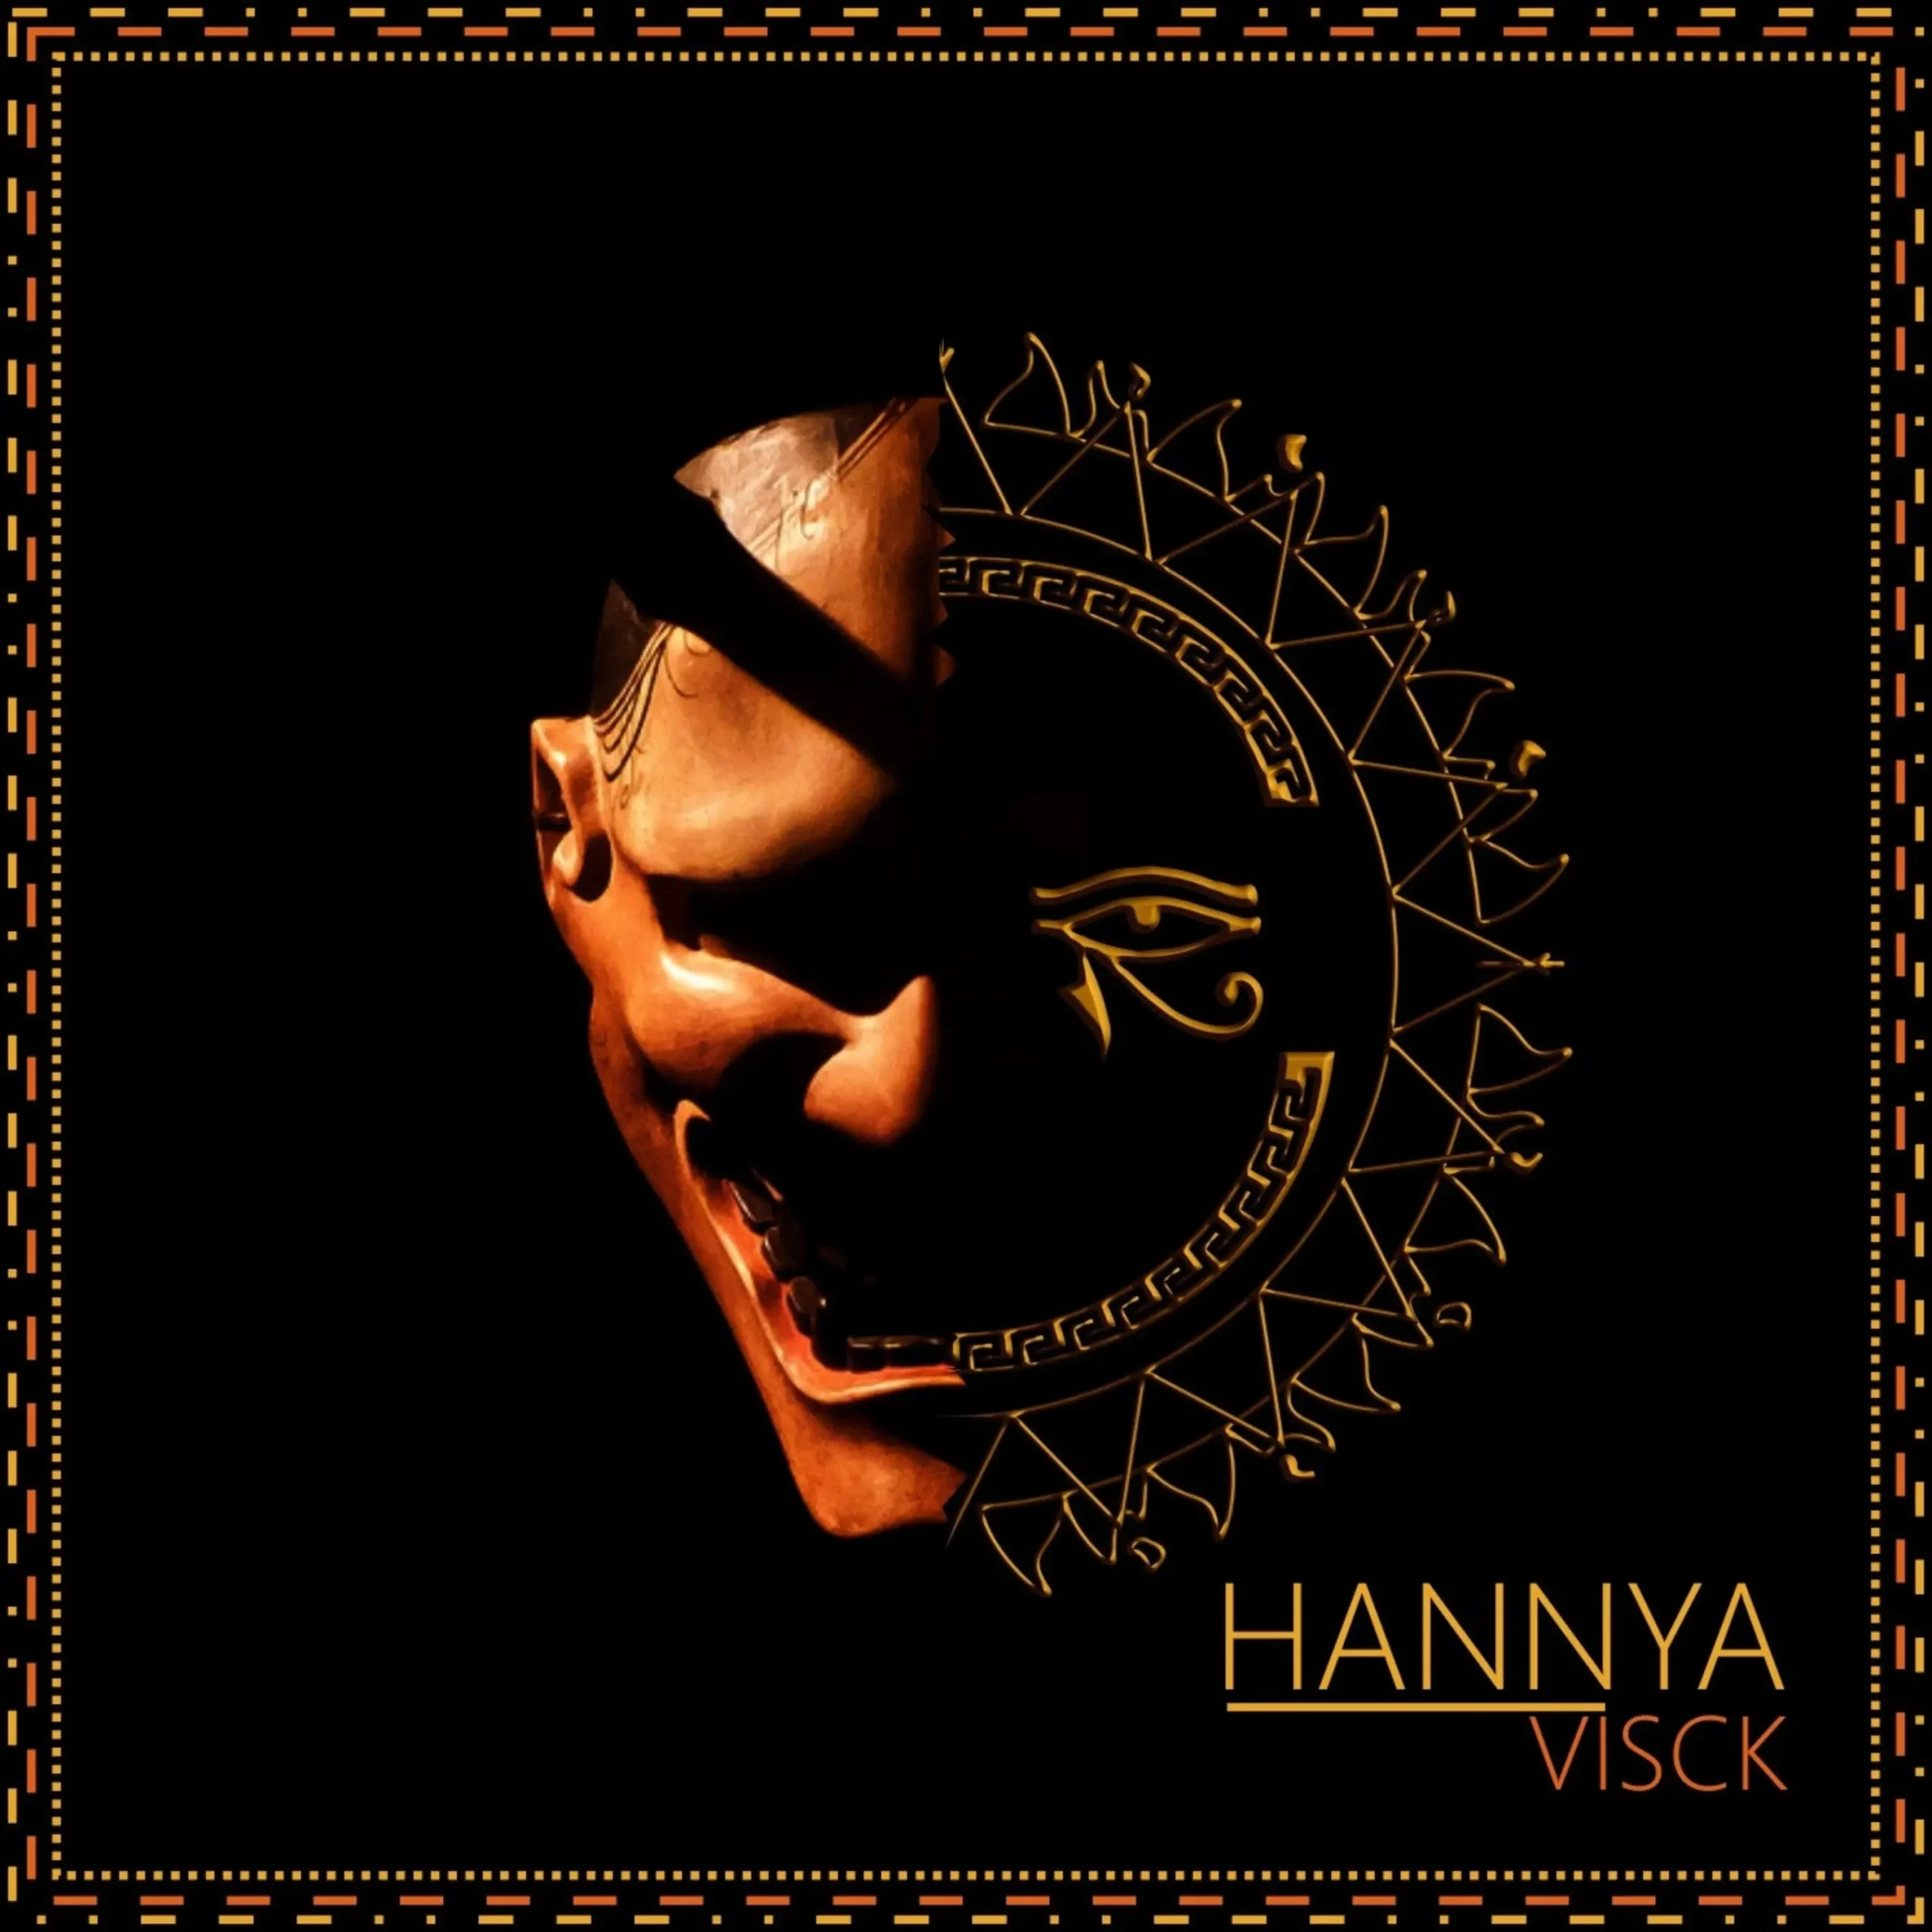 Visck - Hannya